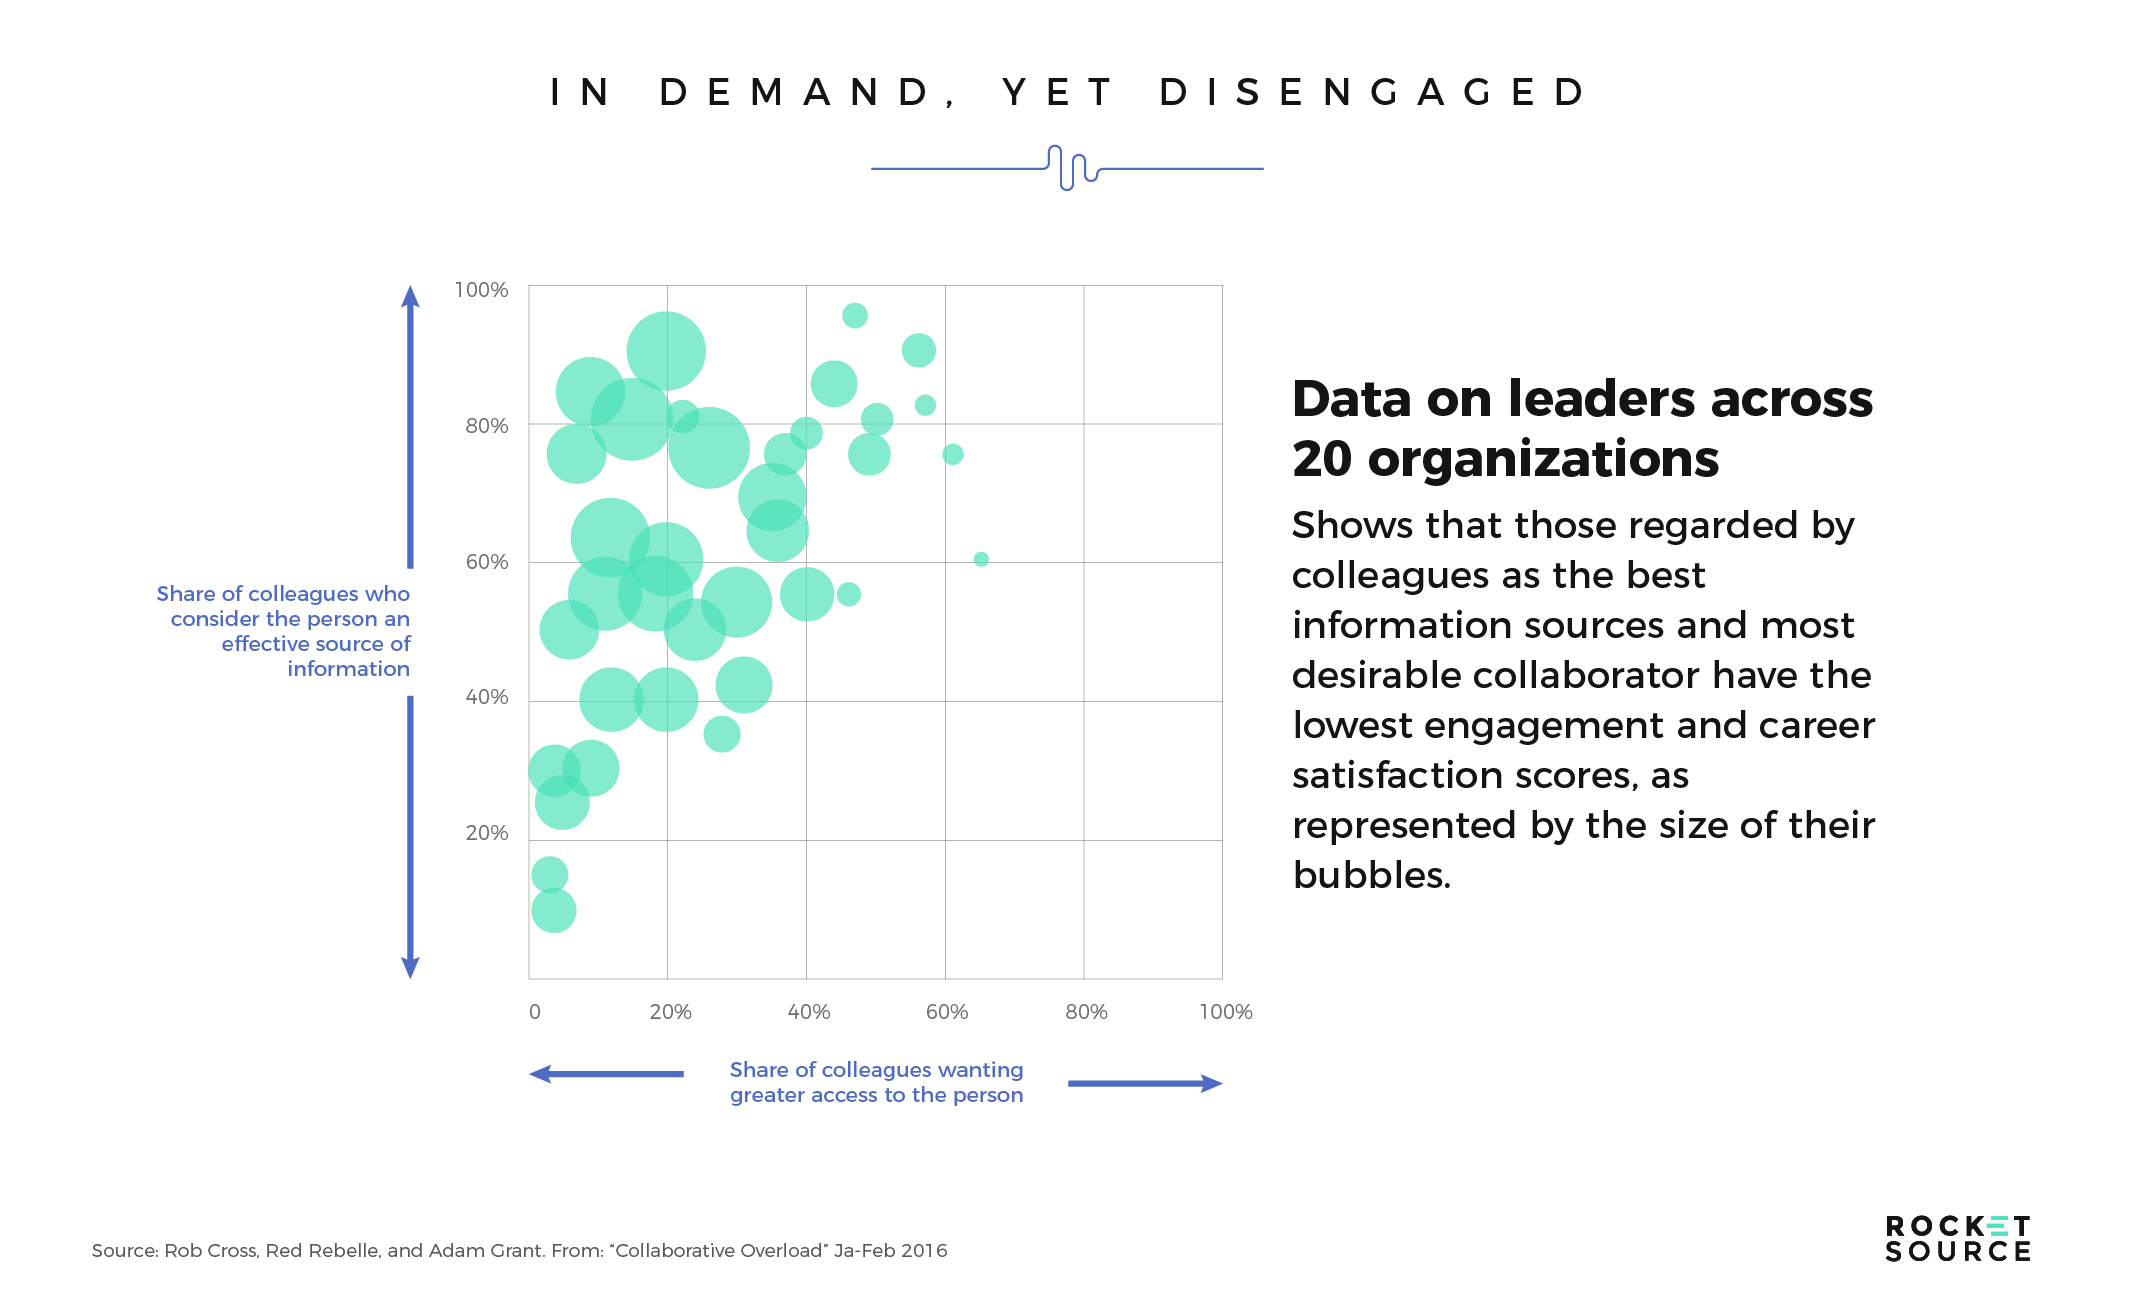 disengaged employees impacting digital transformation initiatives